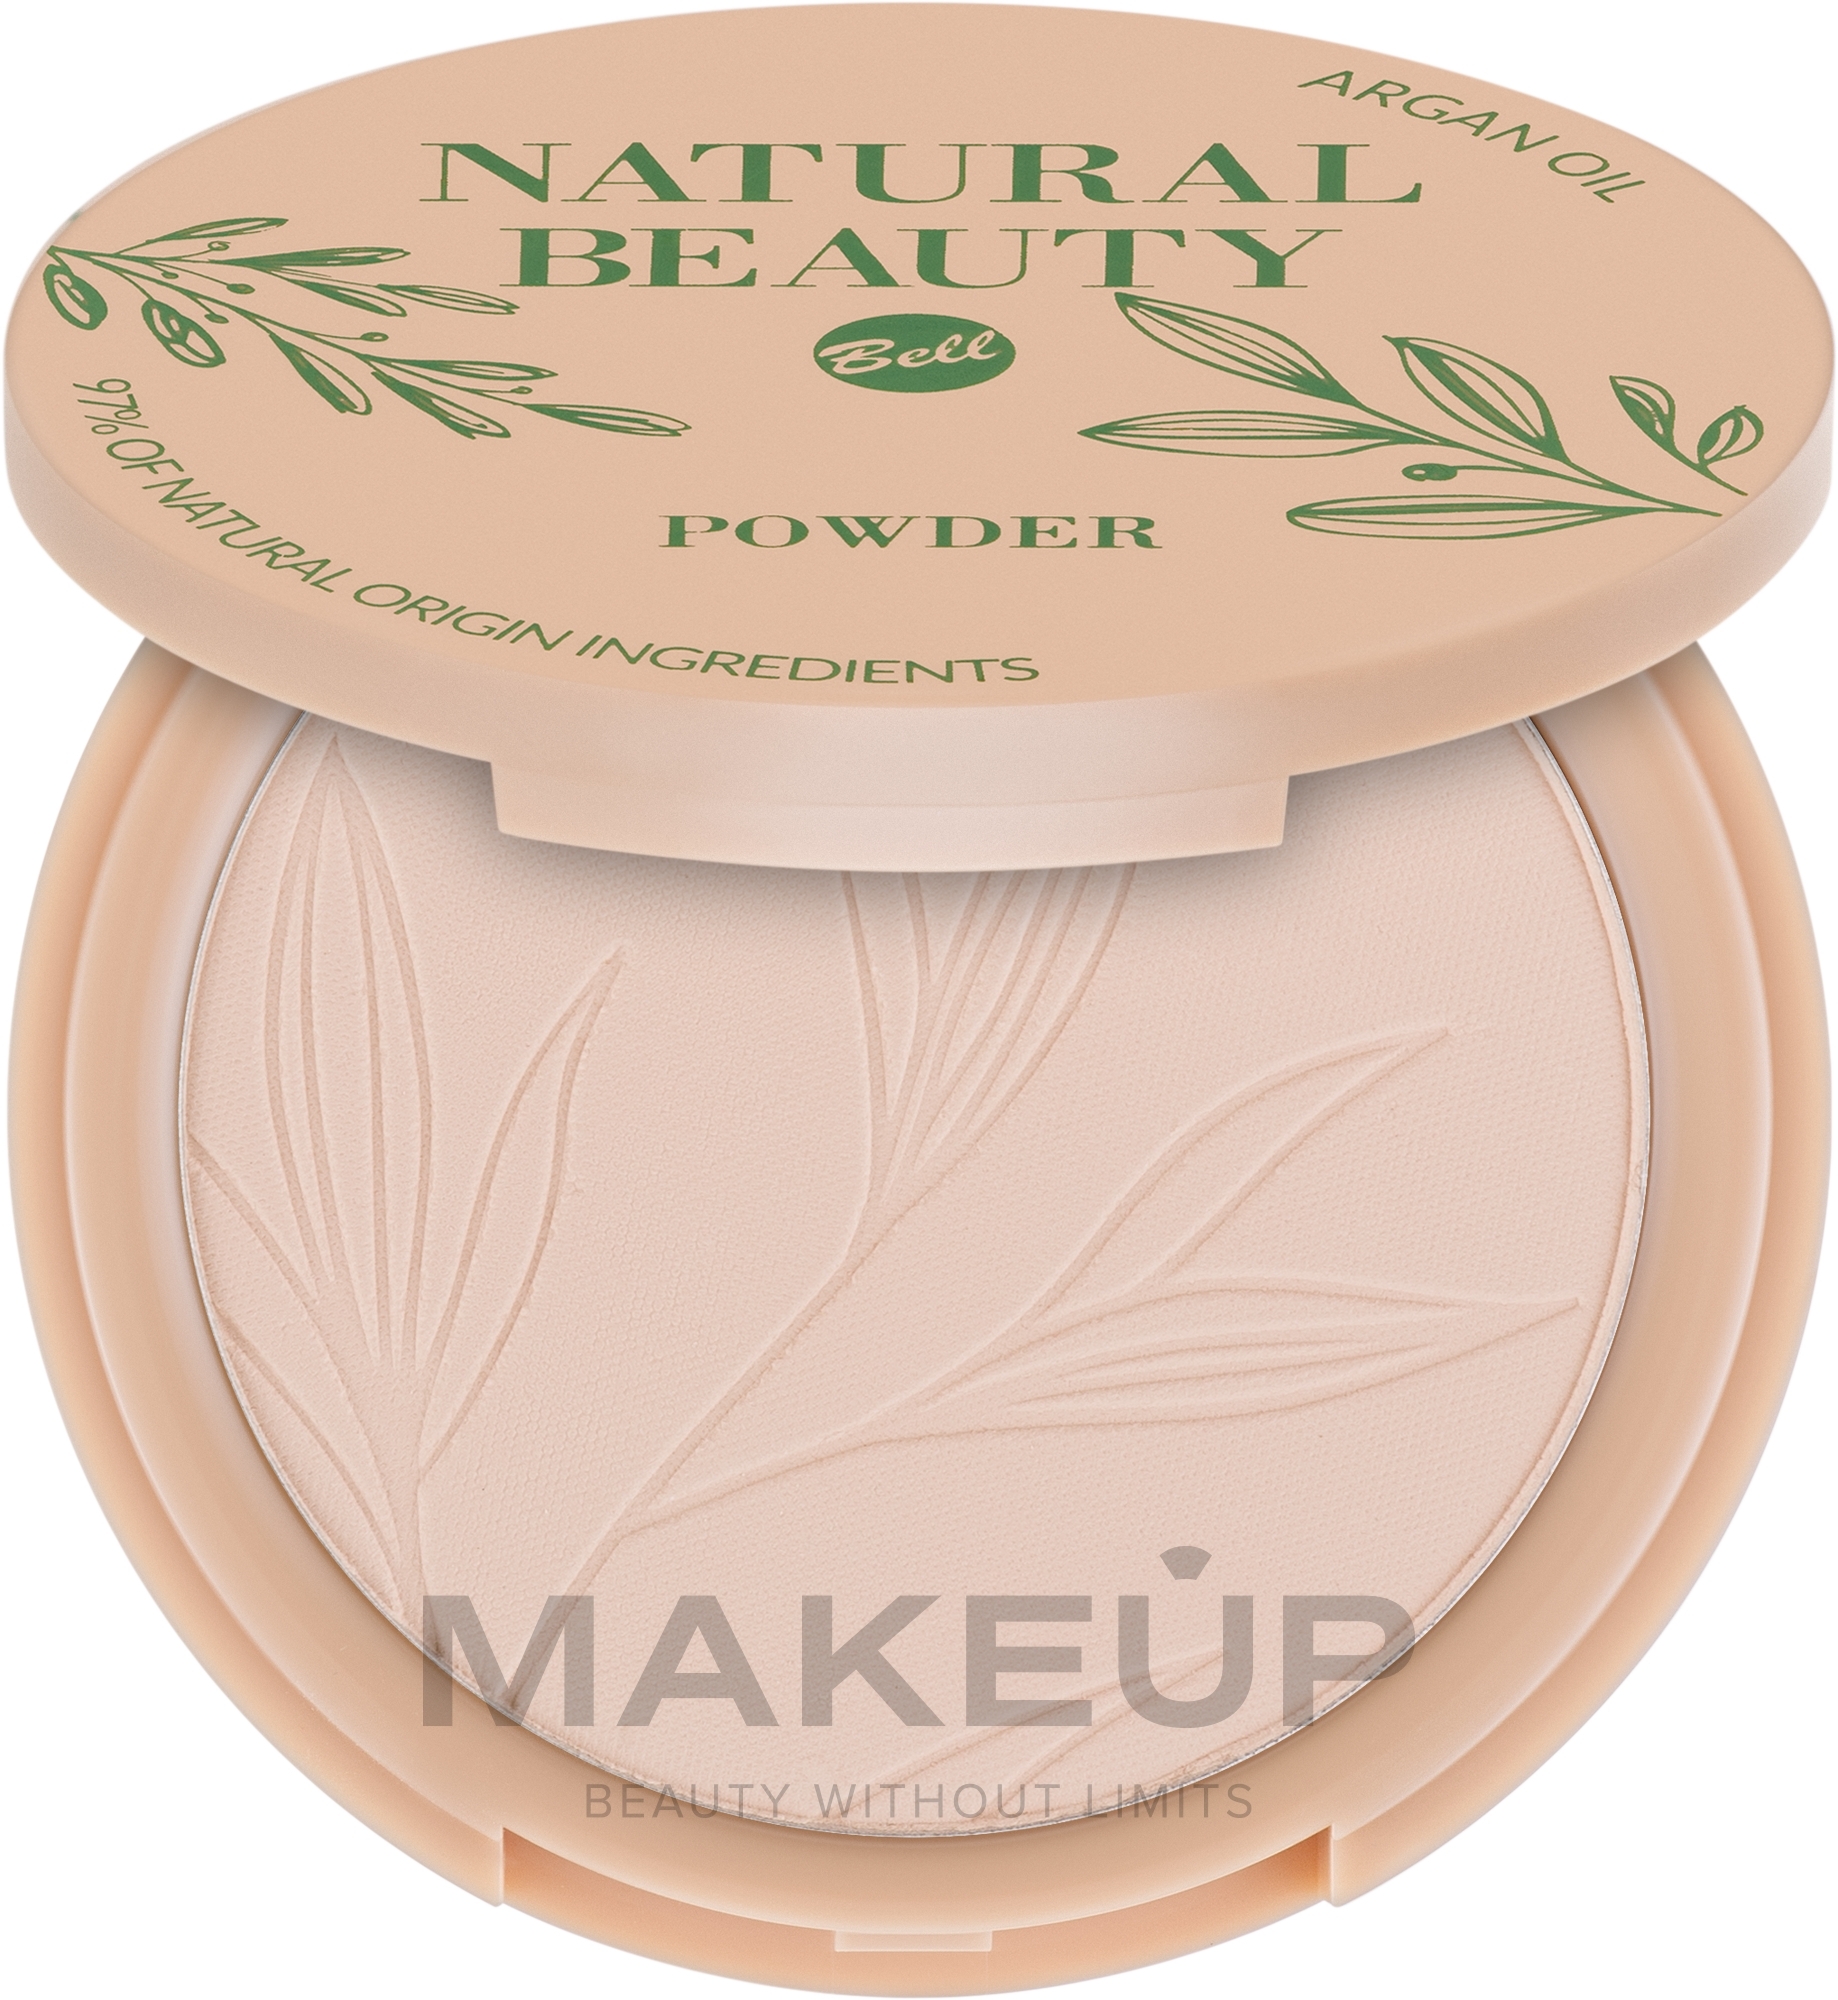 Bell Natural Beauty Powder